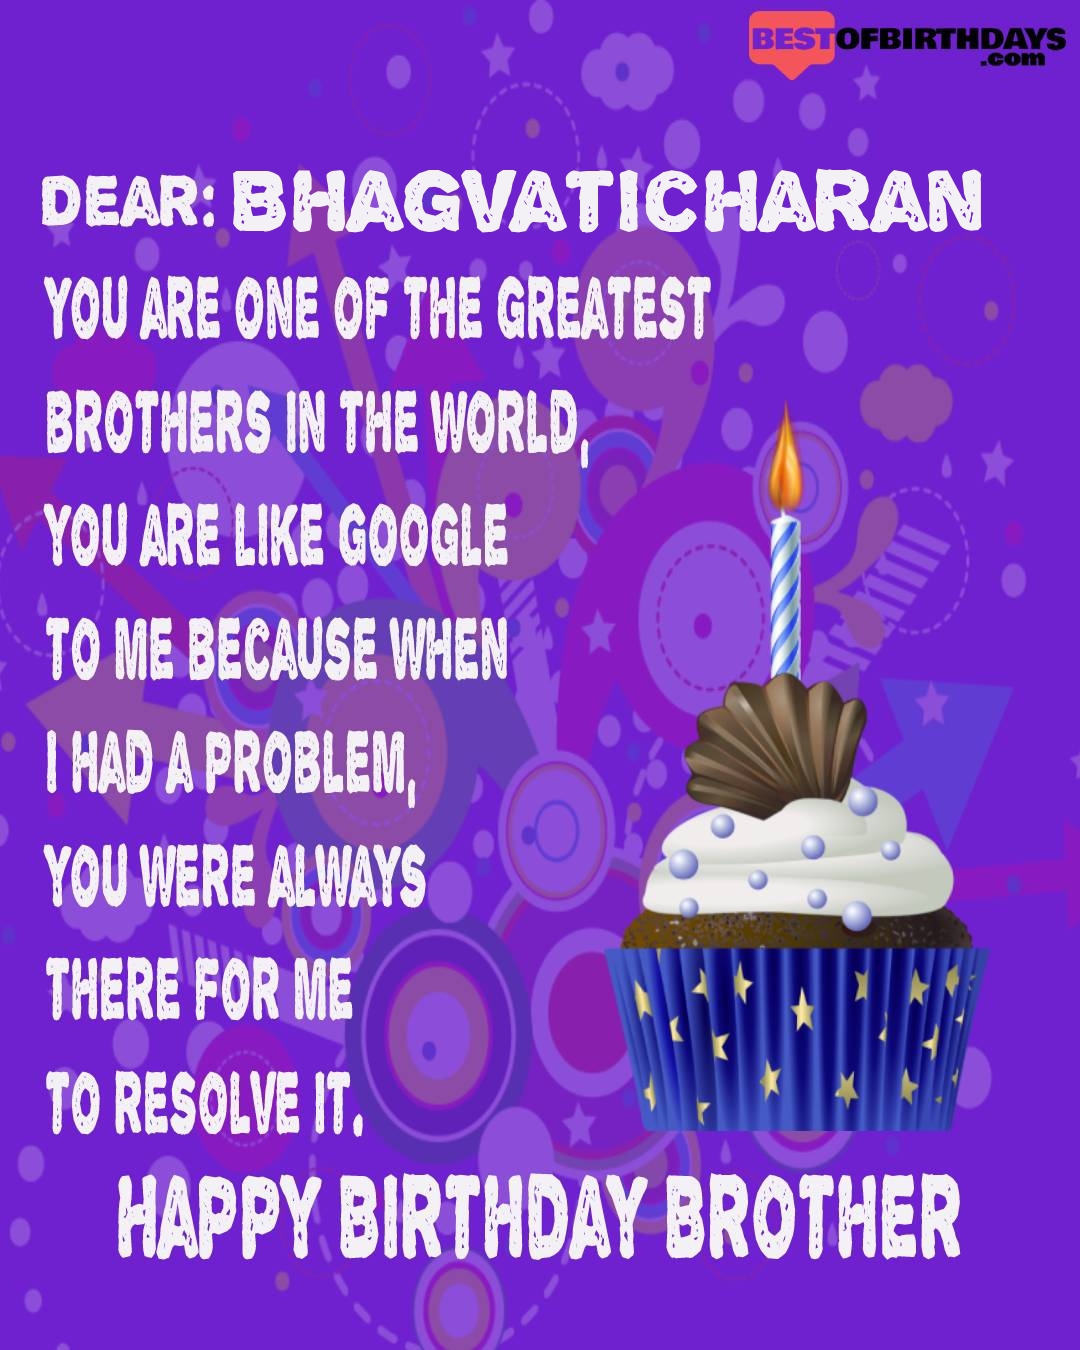 Happy birthday bhagvaticharan bhai brother bro